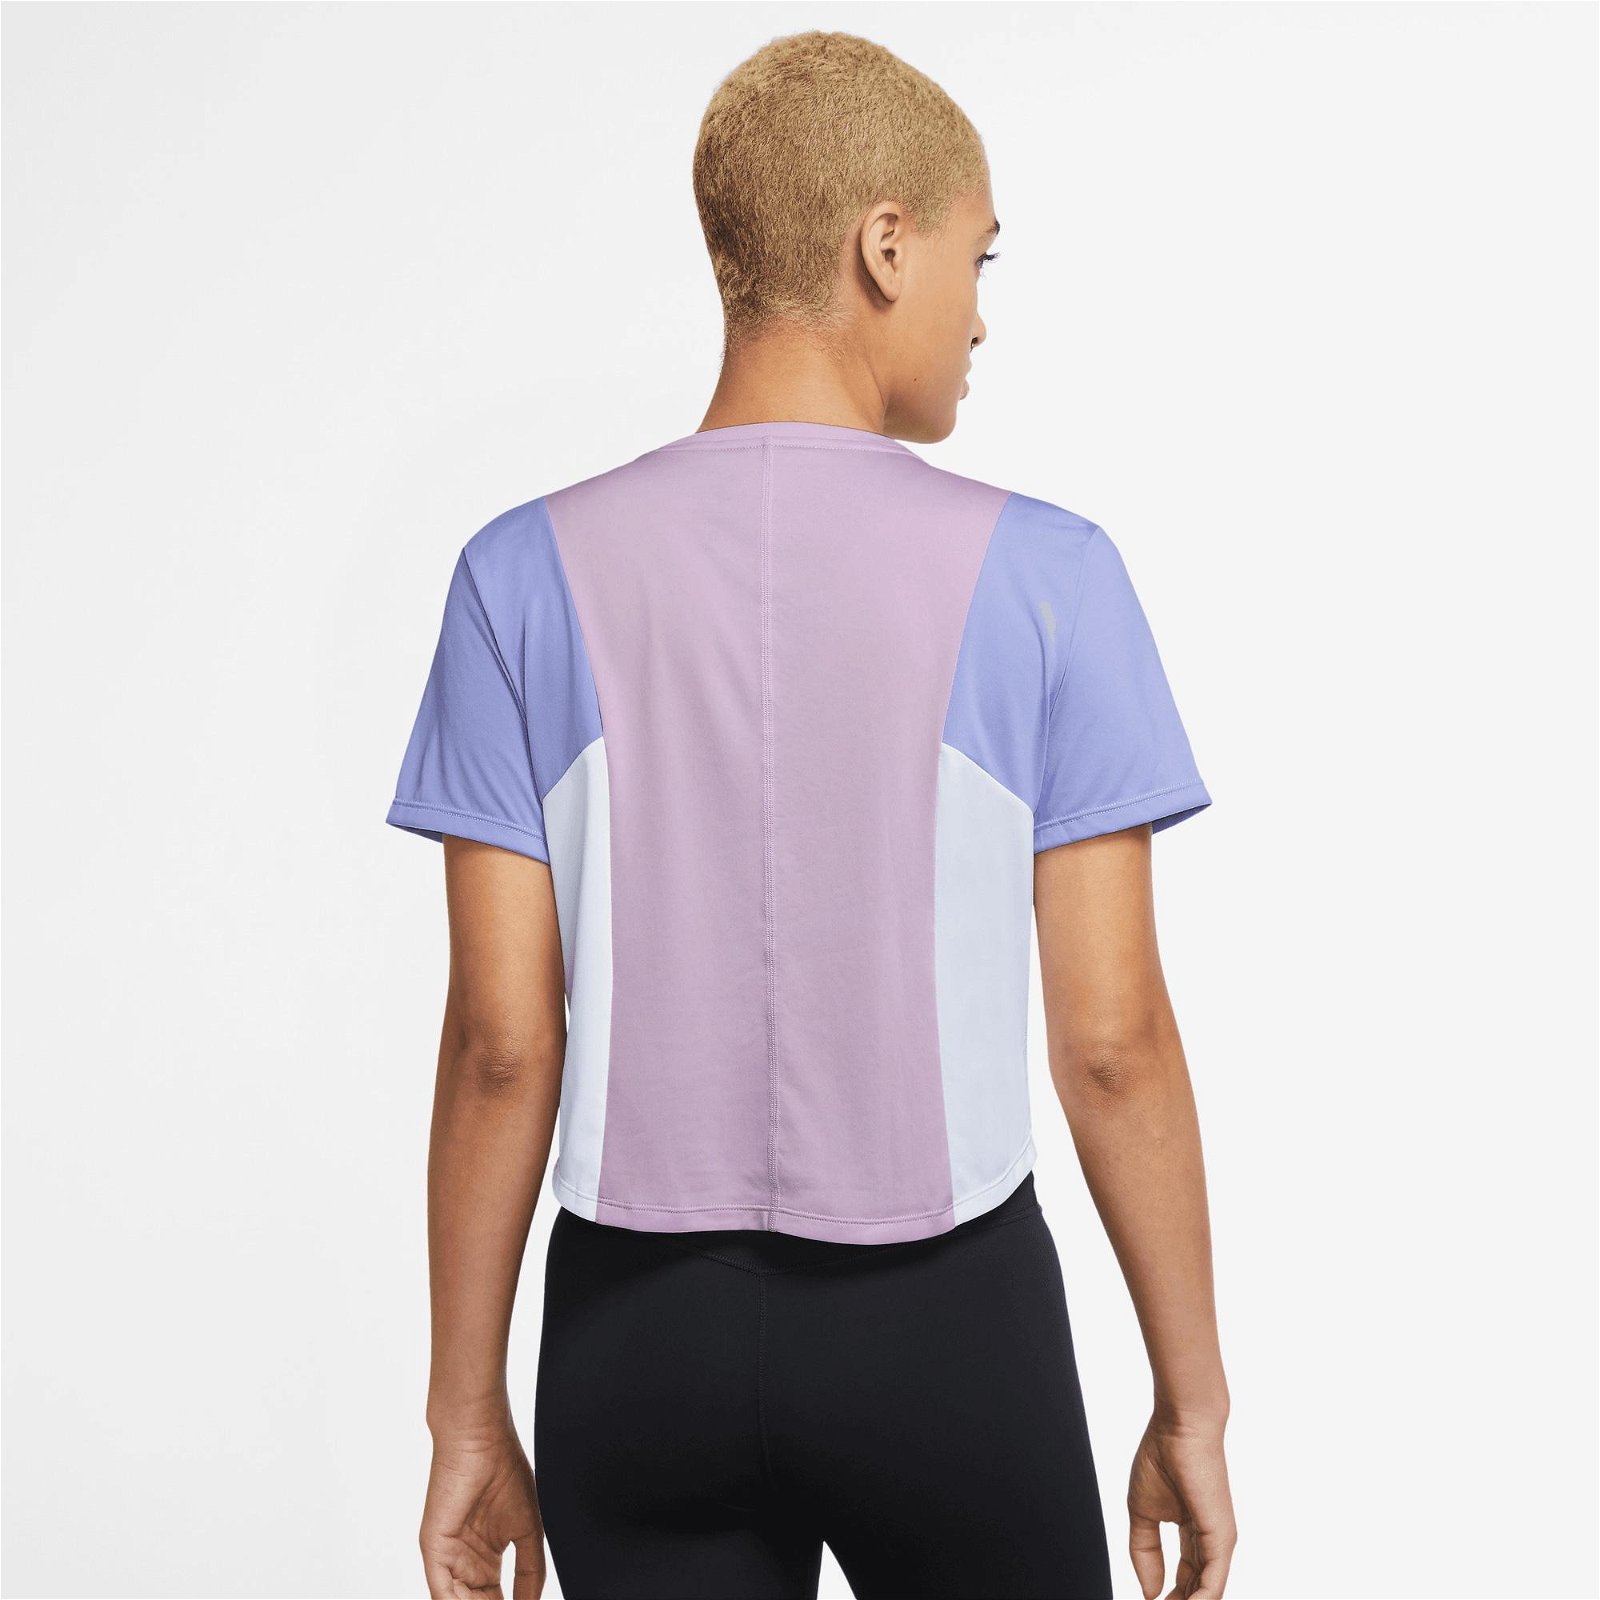 Nike One Dri-FIT Standard Kadın Mor Crop T-Shirt